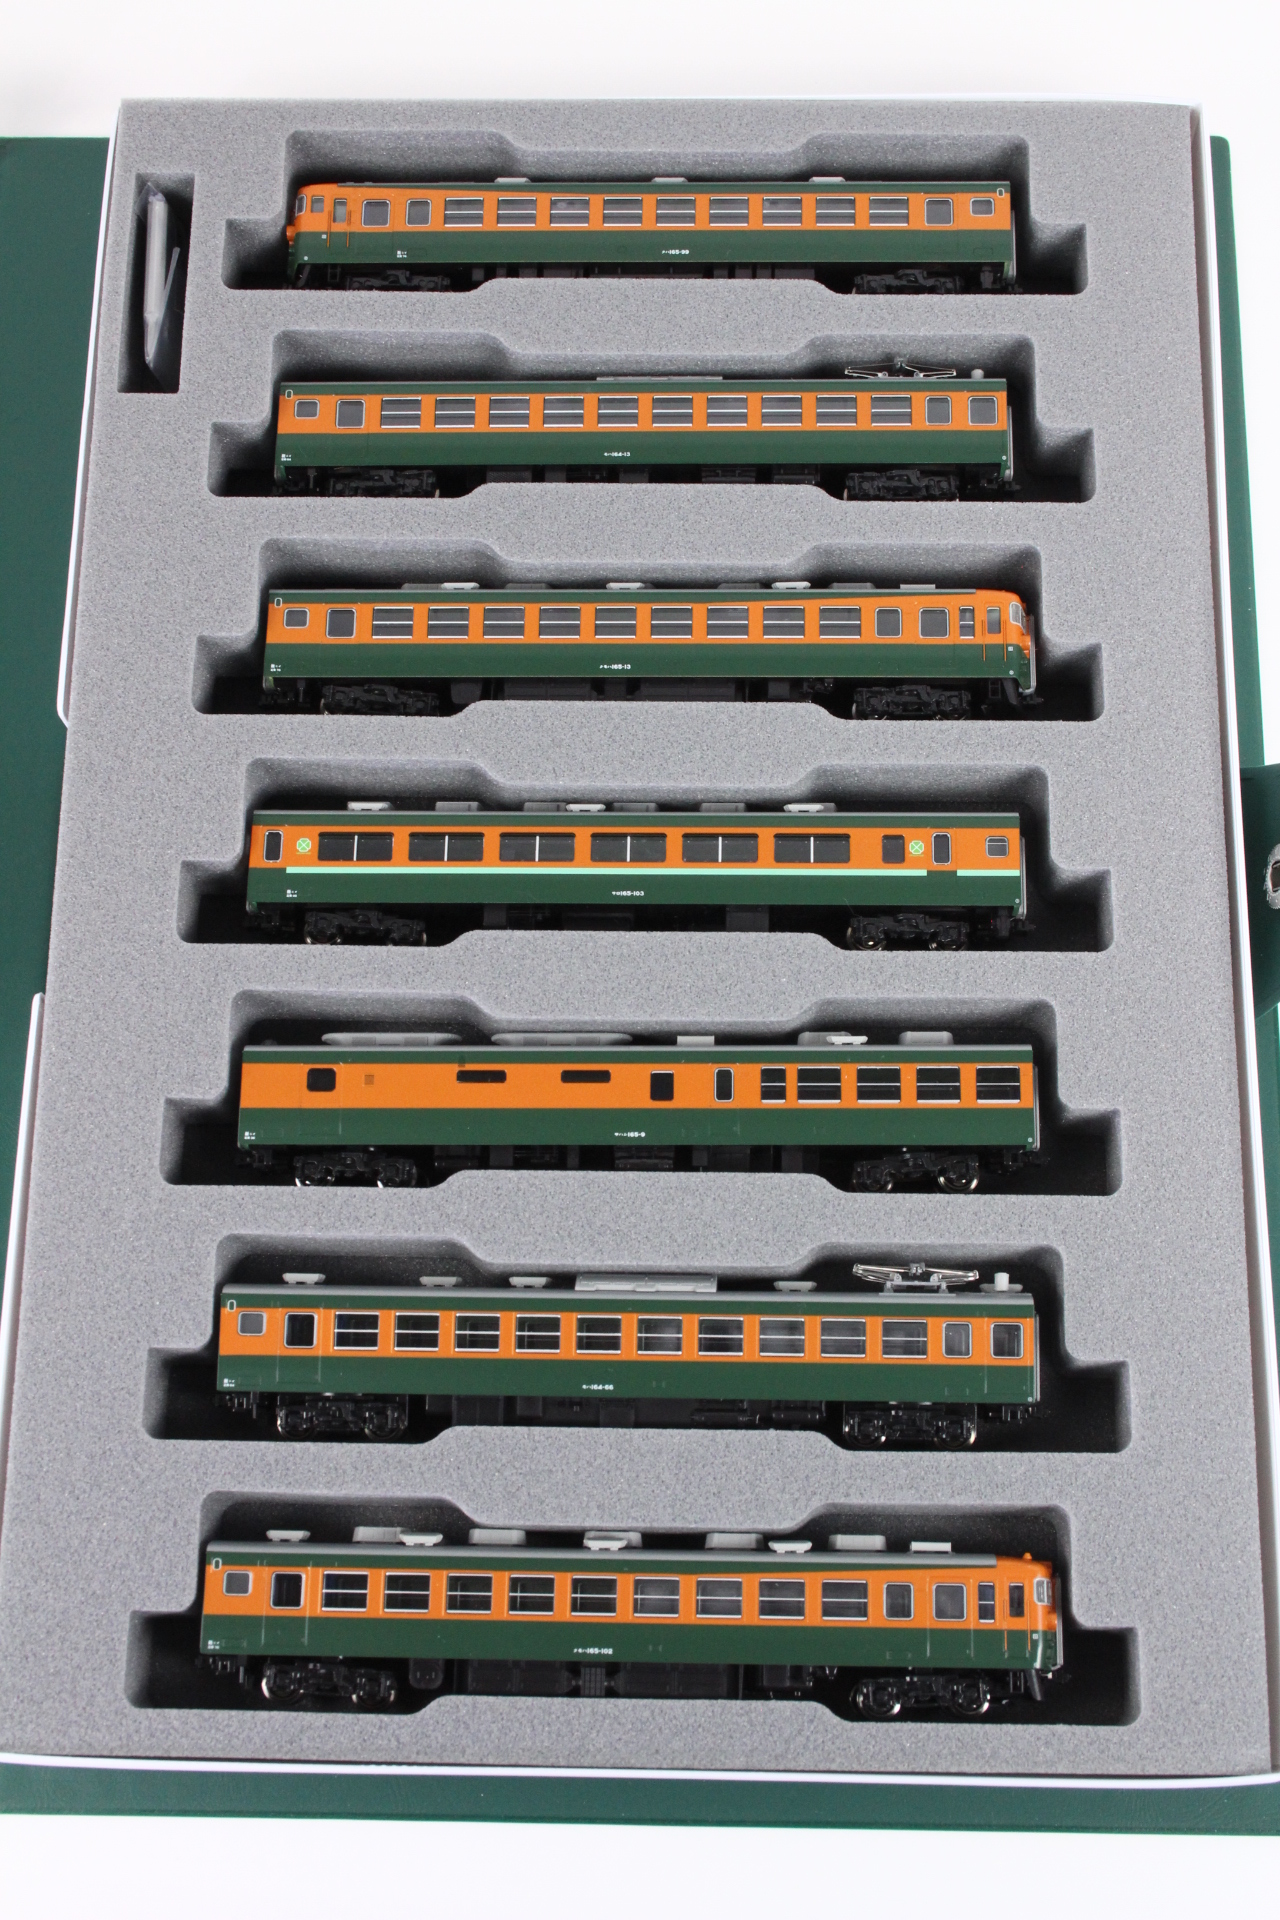 KATO 10-1489 165系急行「佐渡」 7両増結セット 鉄道模型 Nゲージ 